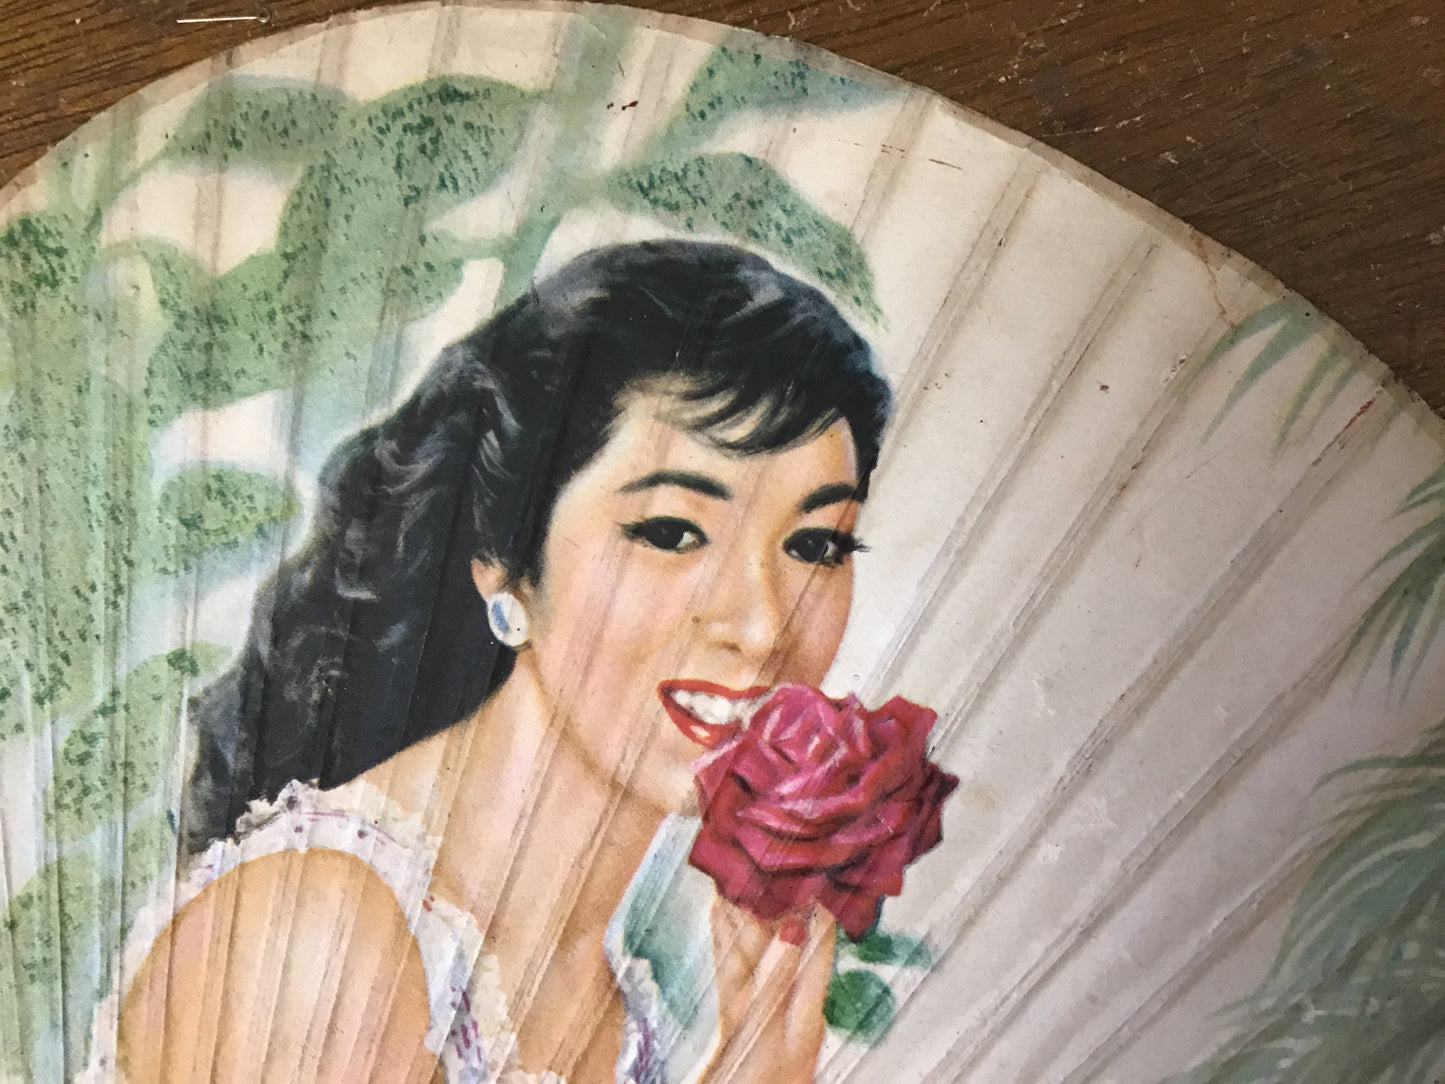 Y1122 OUGI Prewar Round Paper Fan red rose woman Japanese vintage Japan antique